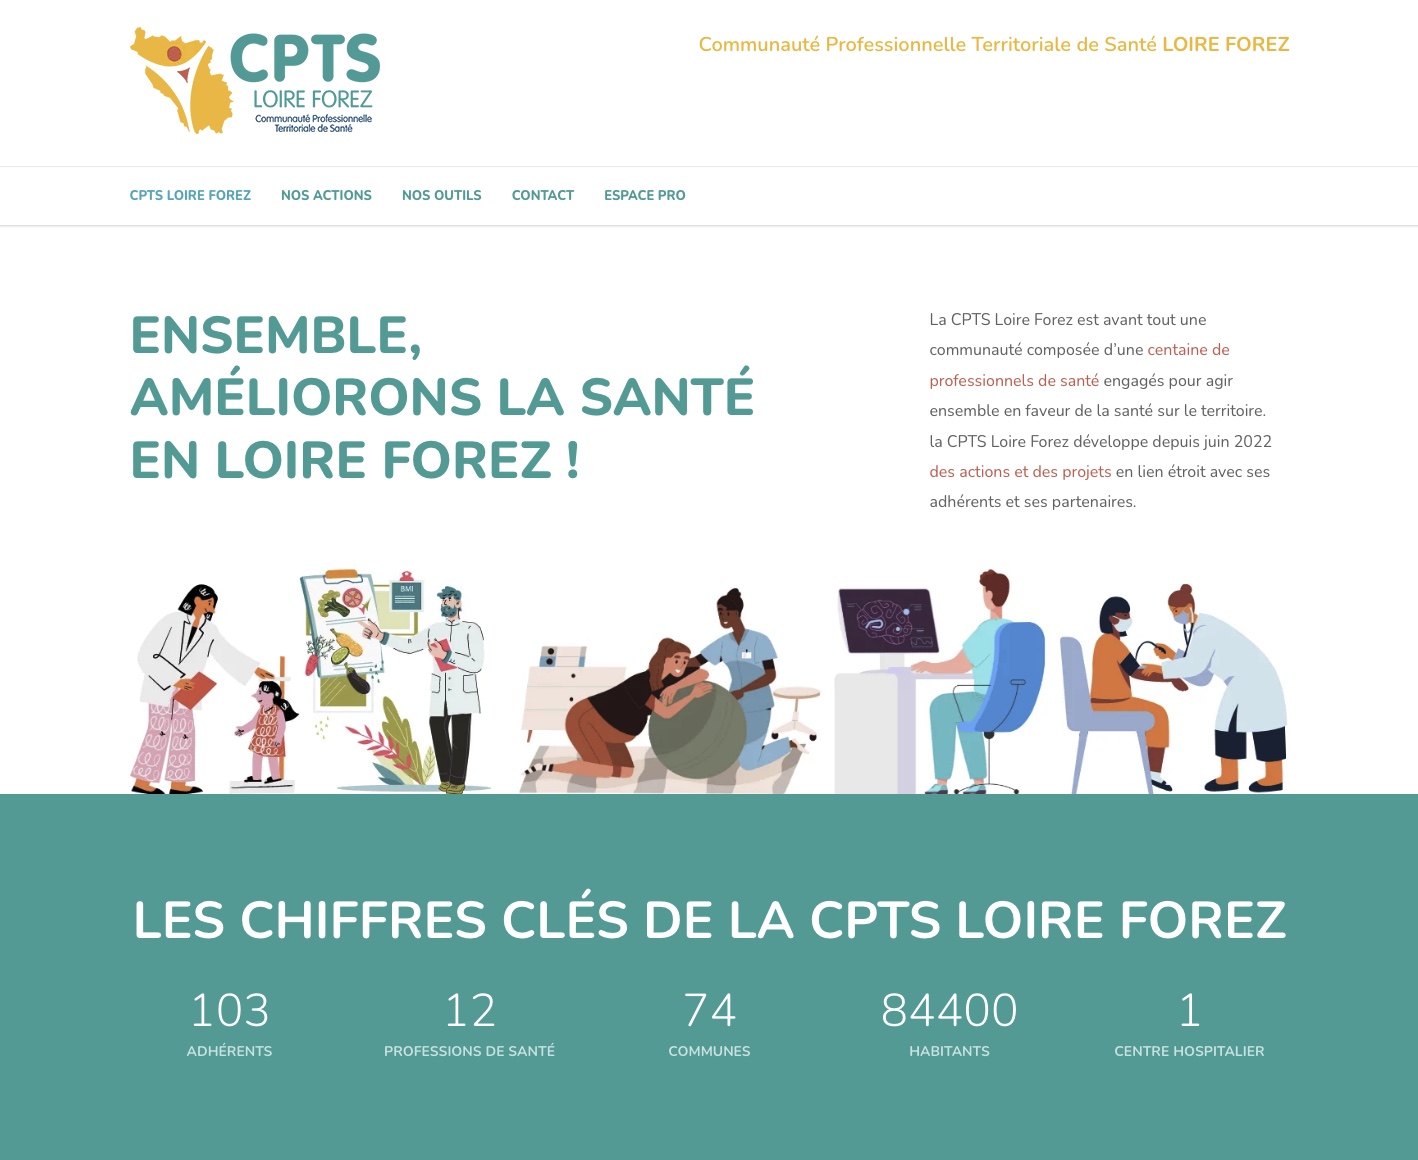 cpts loire forez - creation site internet